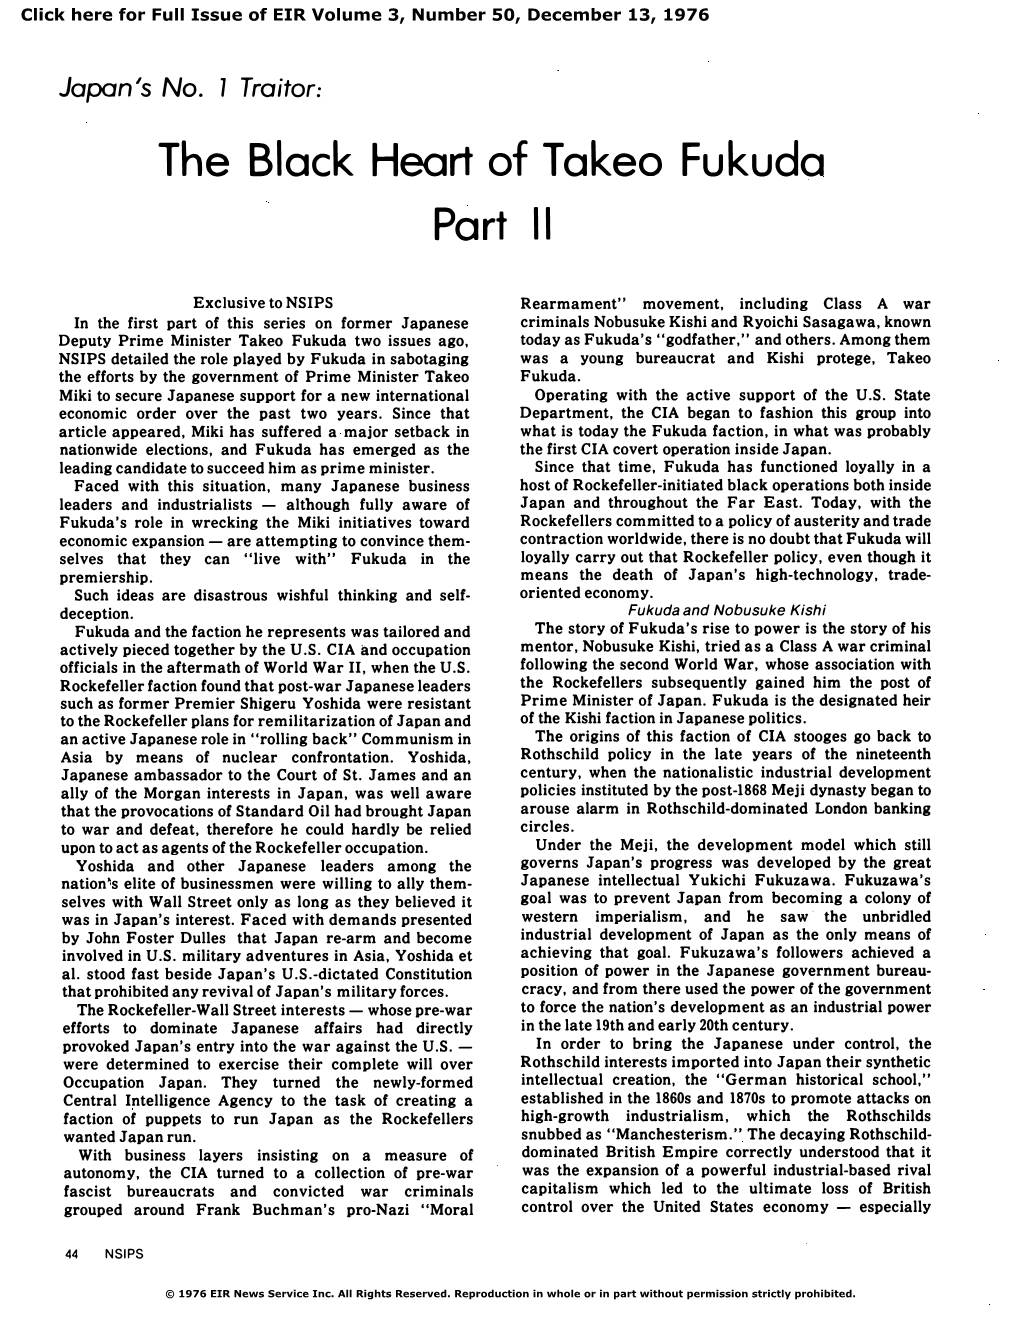 Japan's No. 1 Traitor: the Black Heart of Takeo Fukuda